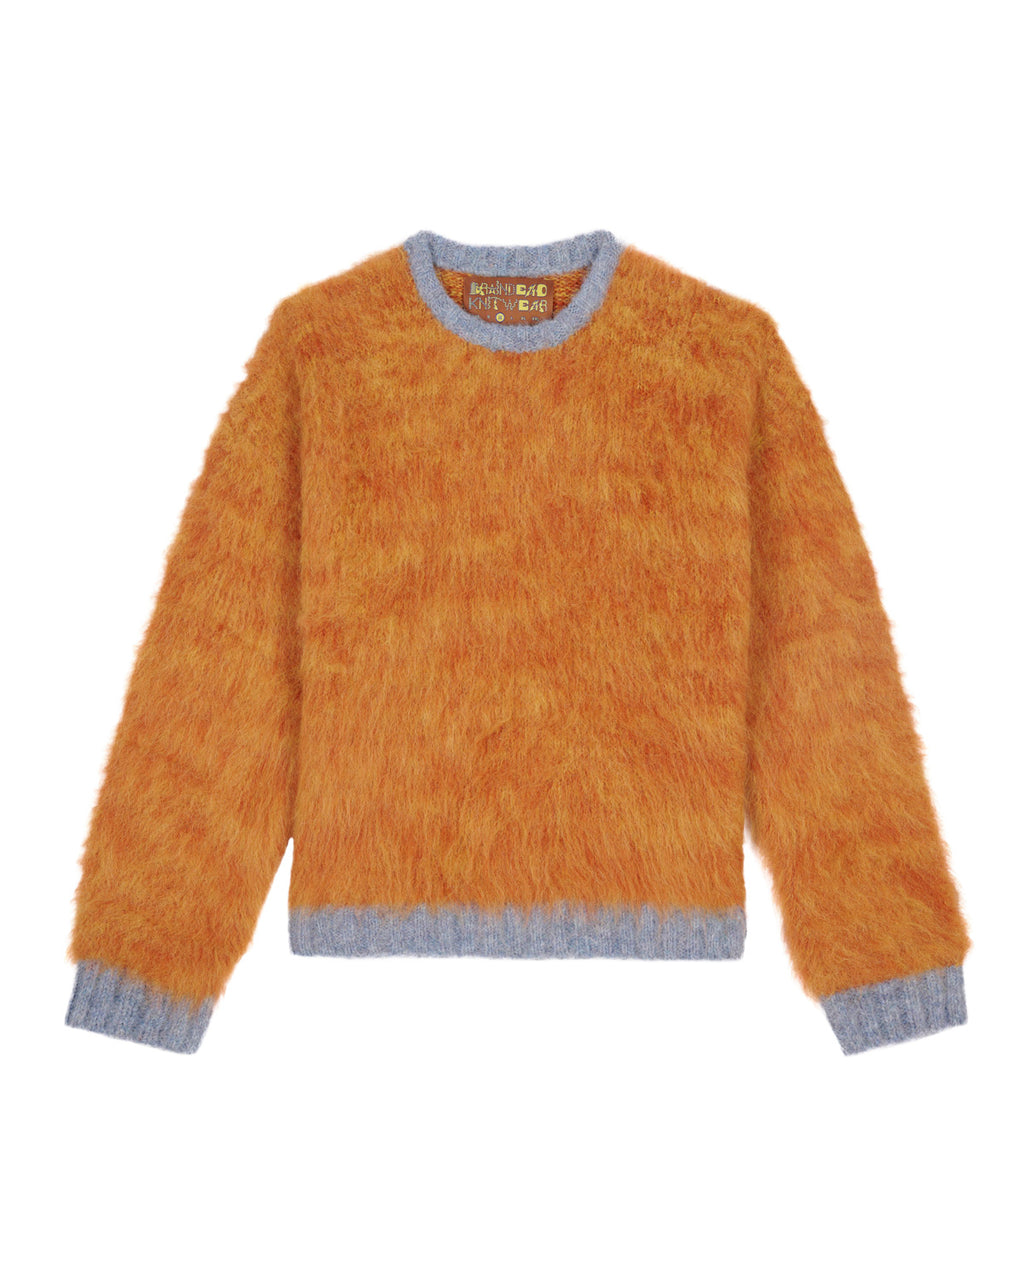 Marled Alpaca Crewneck Sweater - Orange